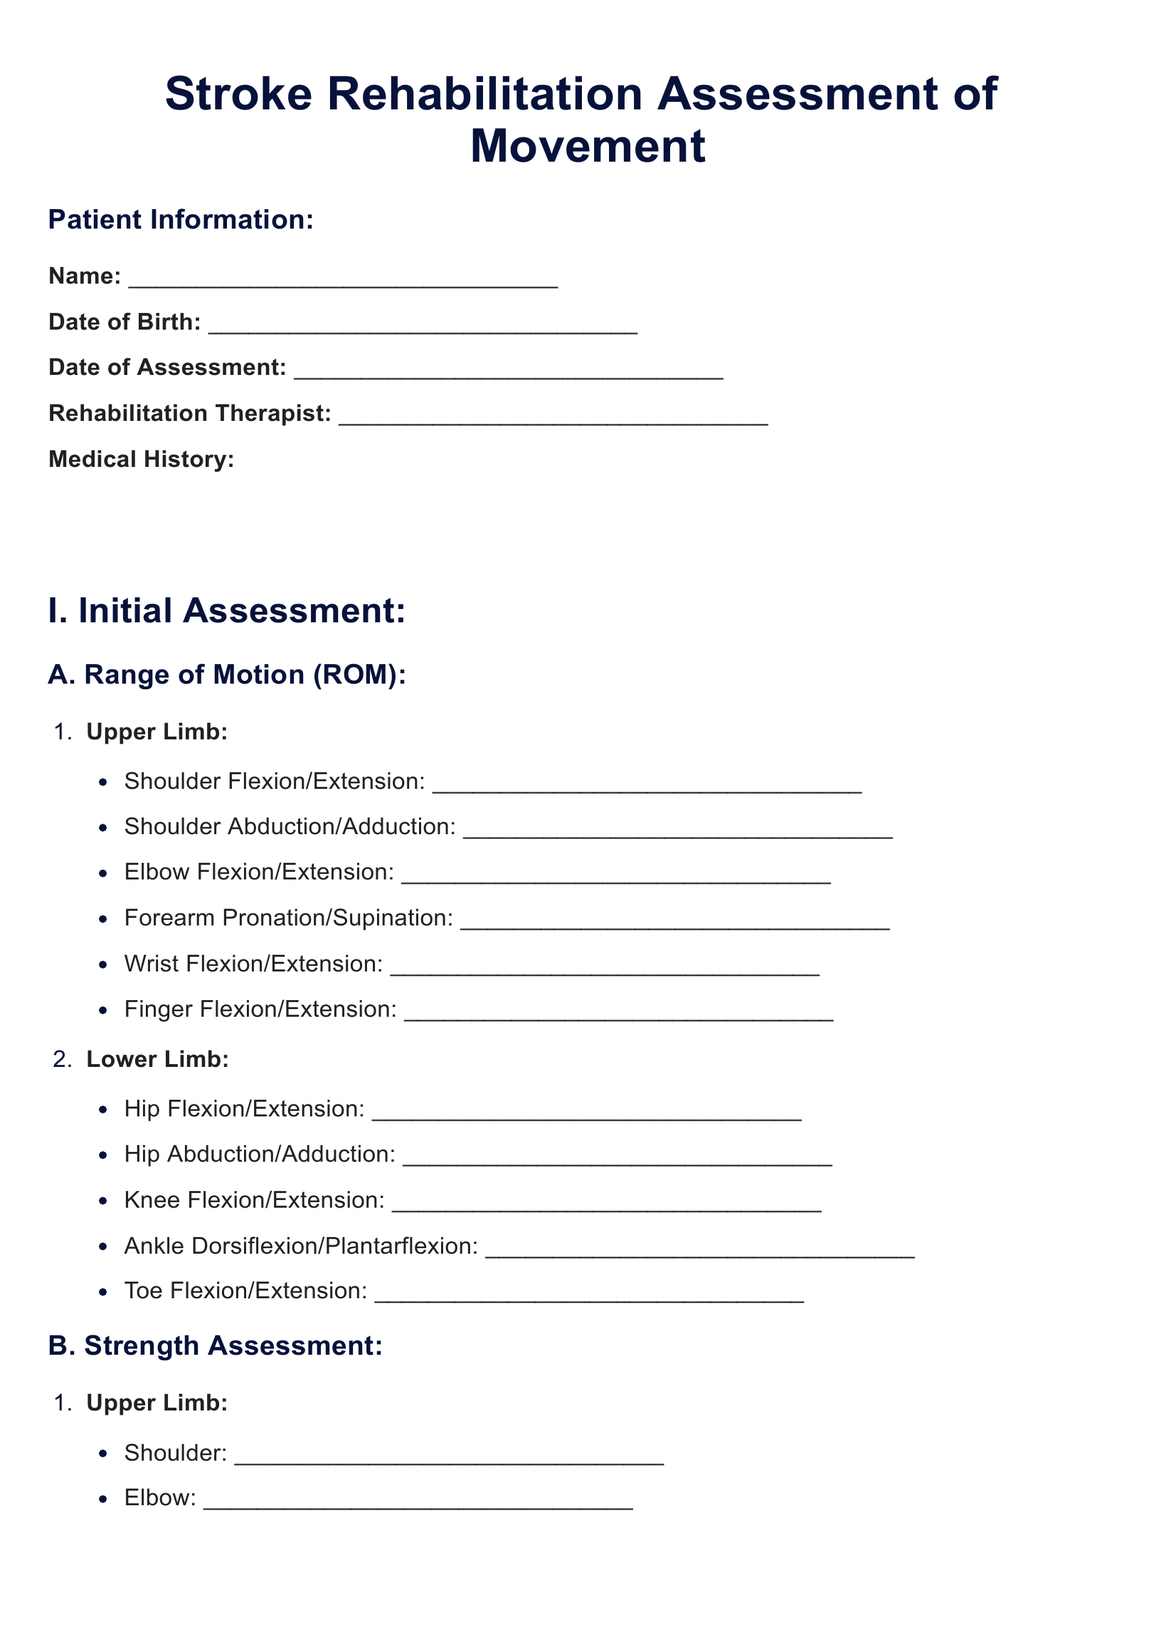 The Stroke Rehabilitation Assessment of Movement (STREAM) PDF Example